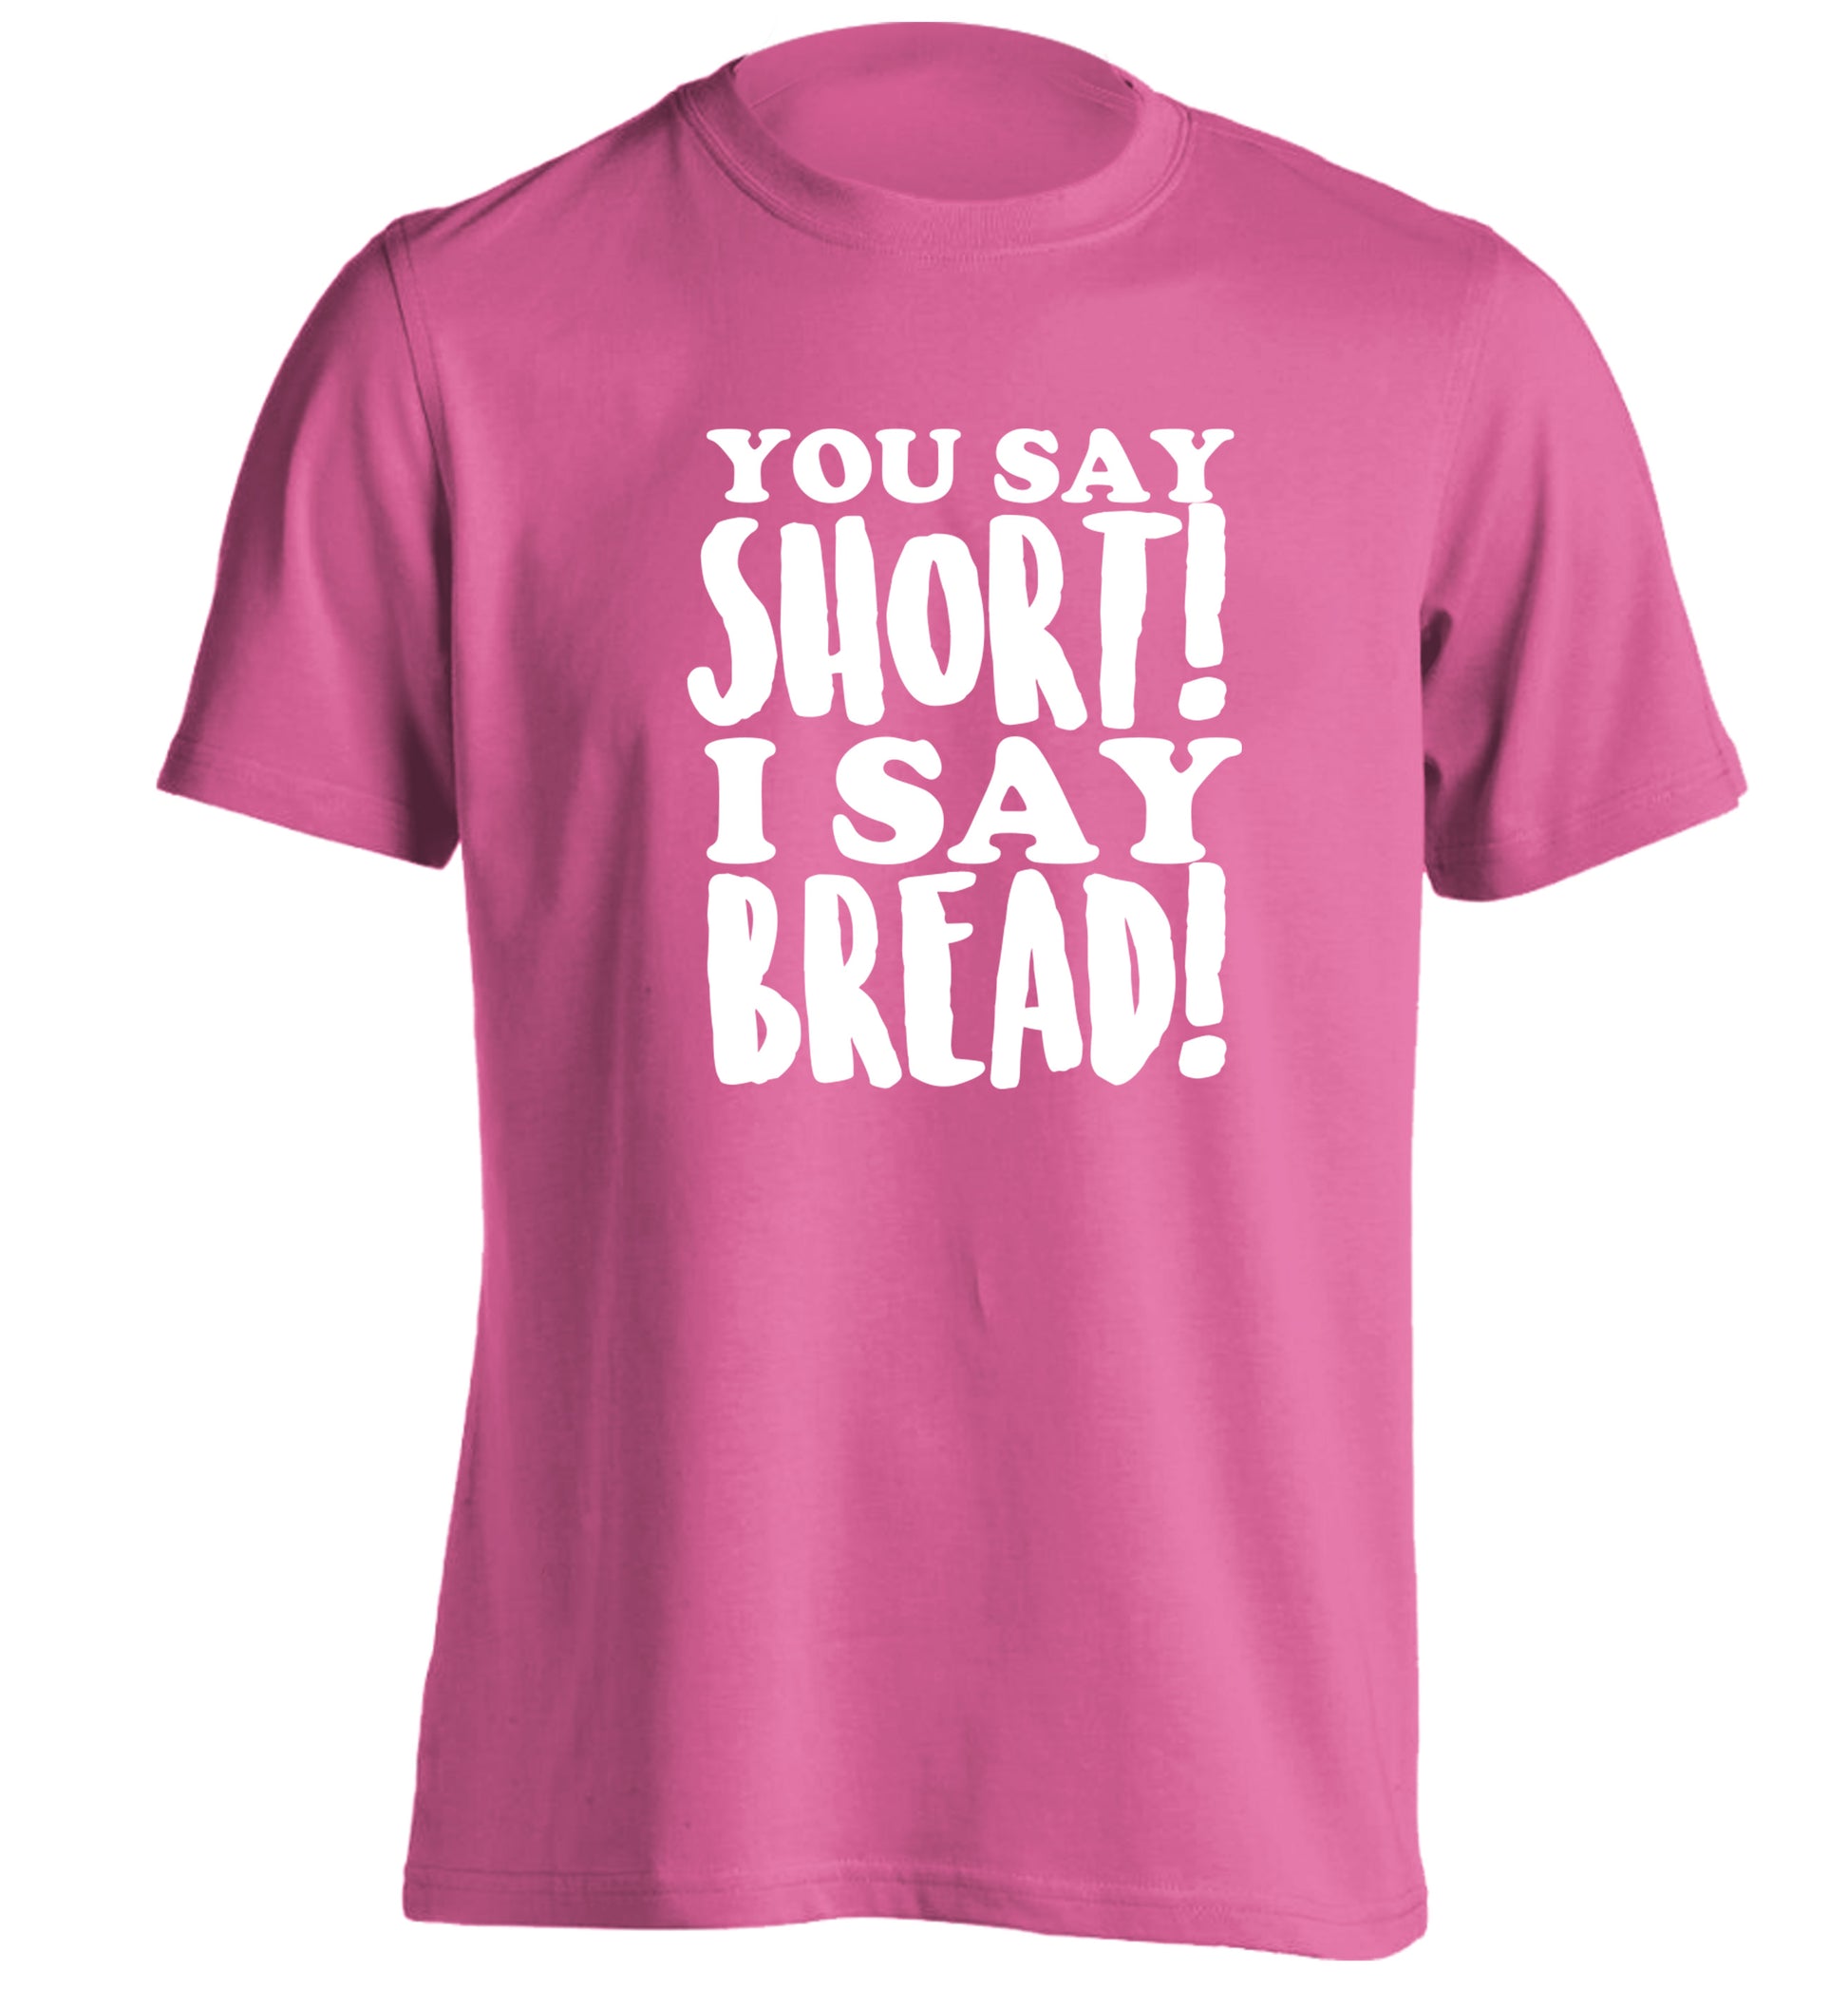 You say short I say bread! adults unisex pink Tshirt 2XL